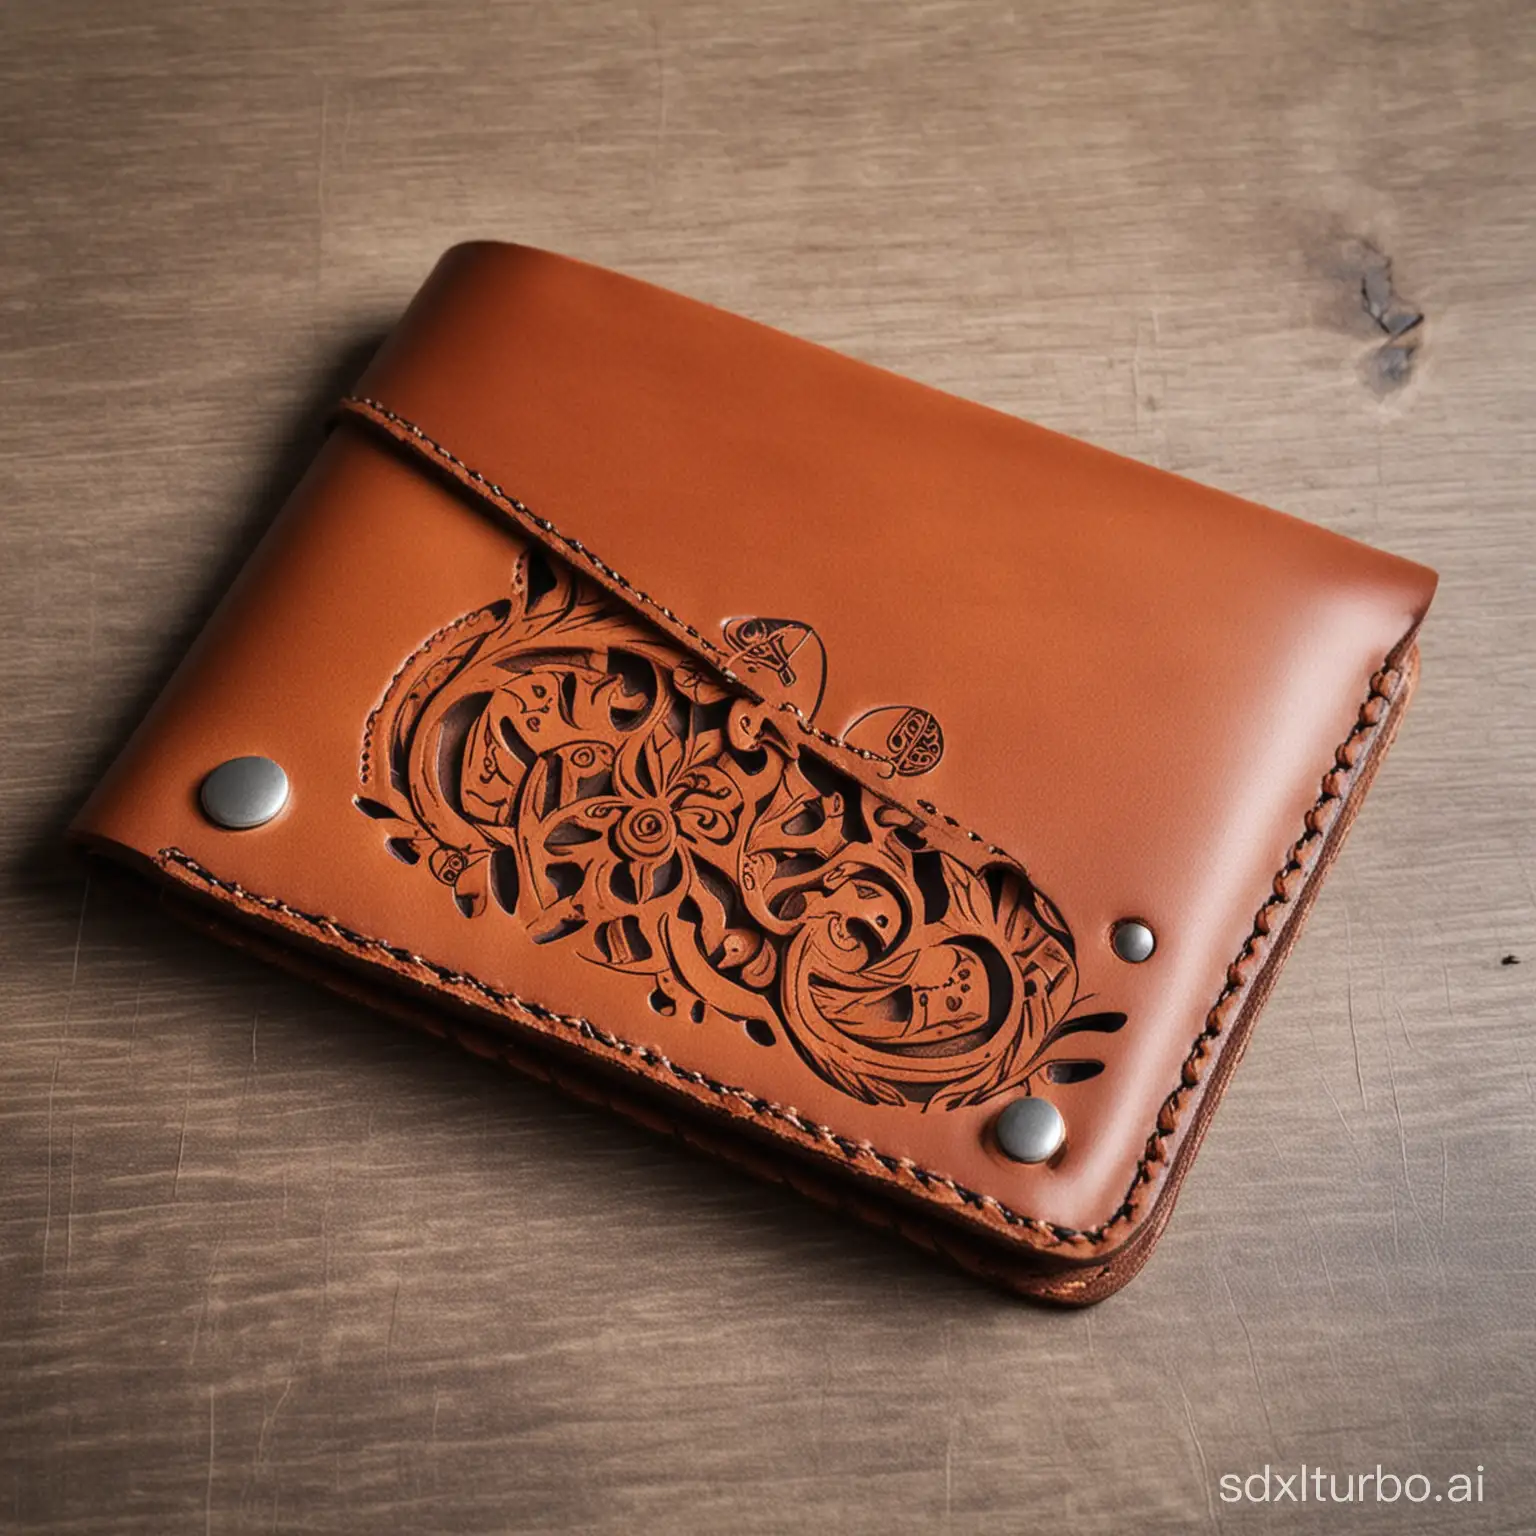 Make a leather wallet artistic design